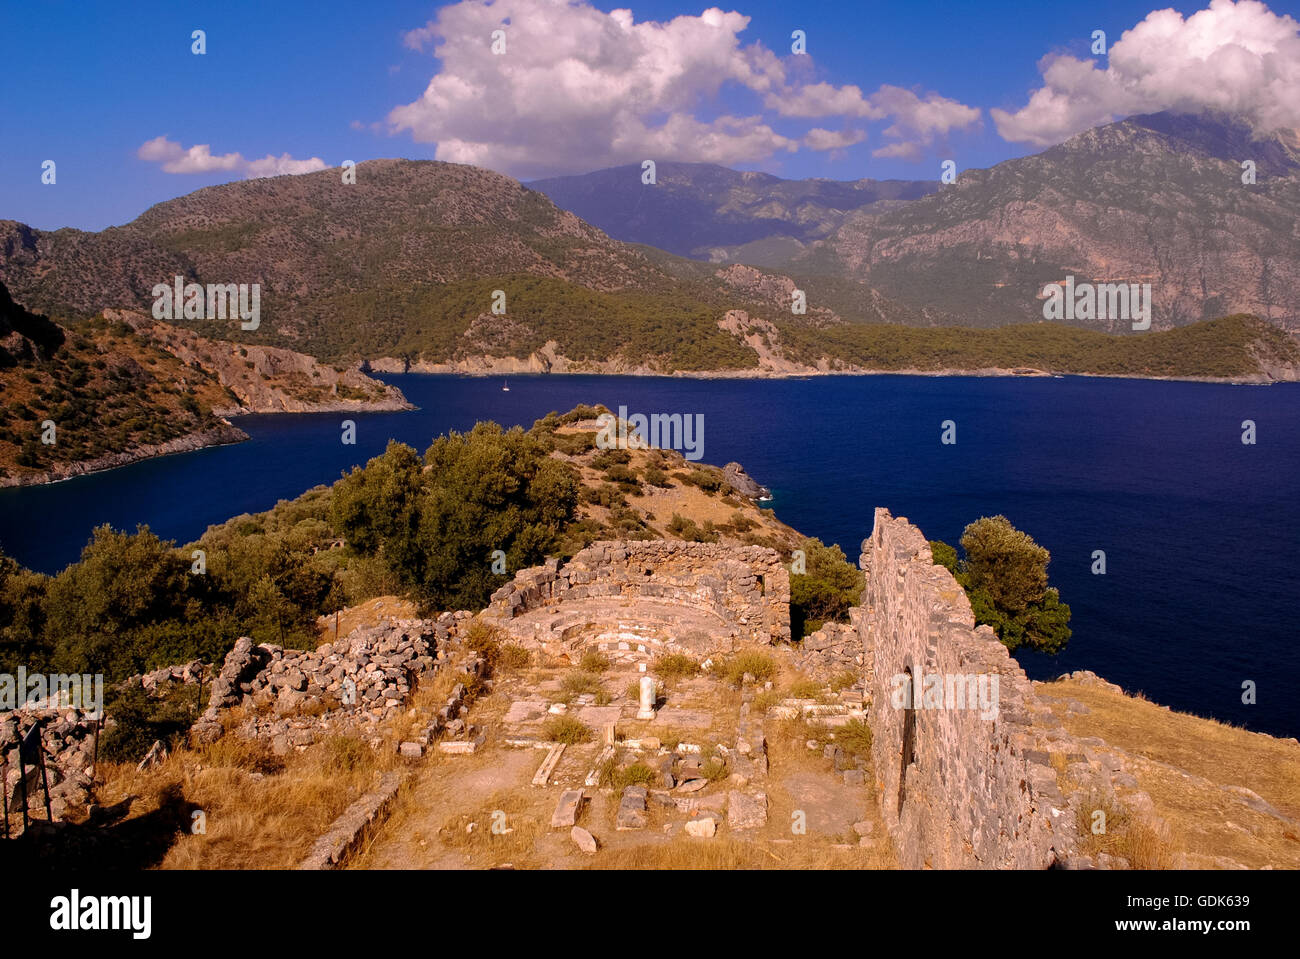 Ancient ruins on Gemiler Island, also known as St Nicholas Island, south of Gocek on the Aegean coast, Turkey. Stock Photo